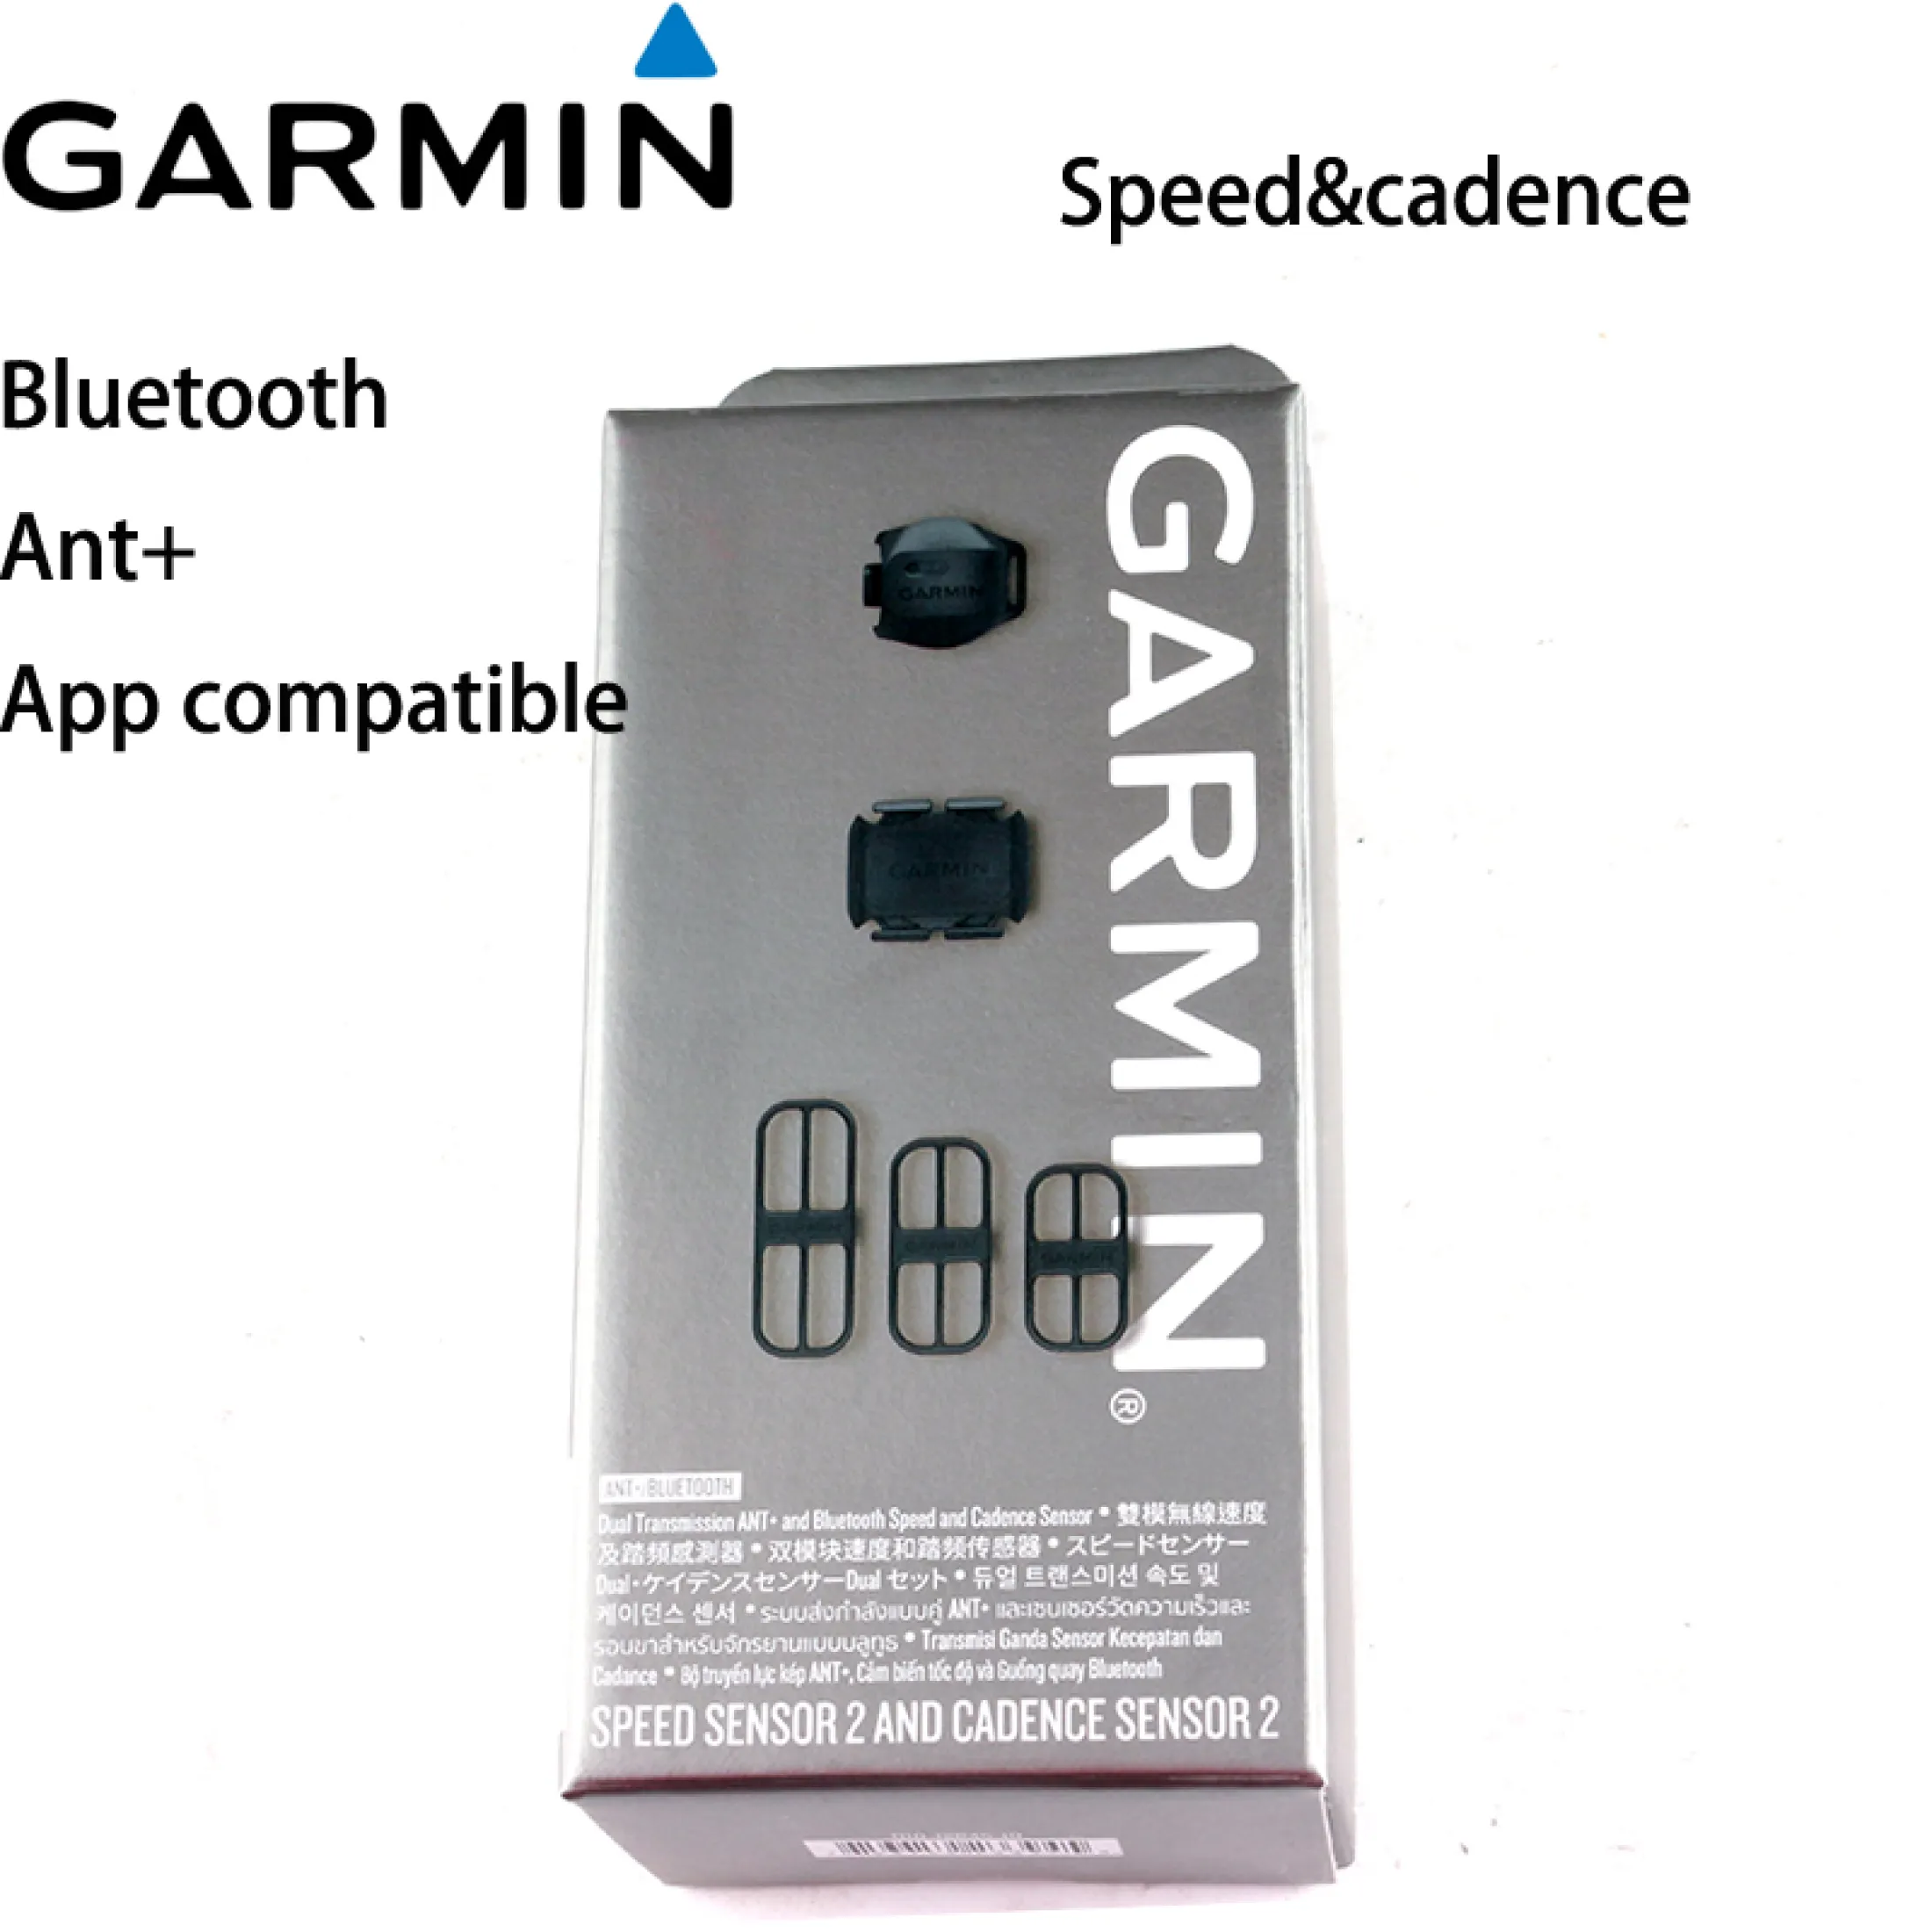 garmin bluetooth sensors